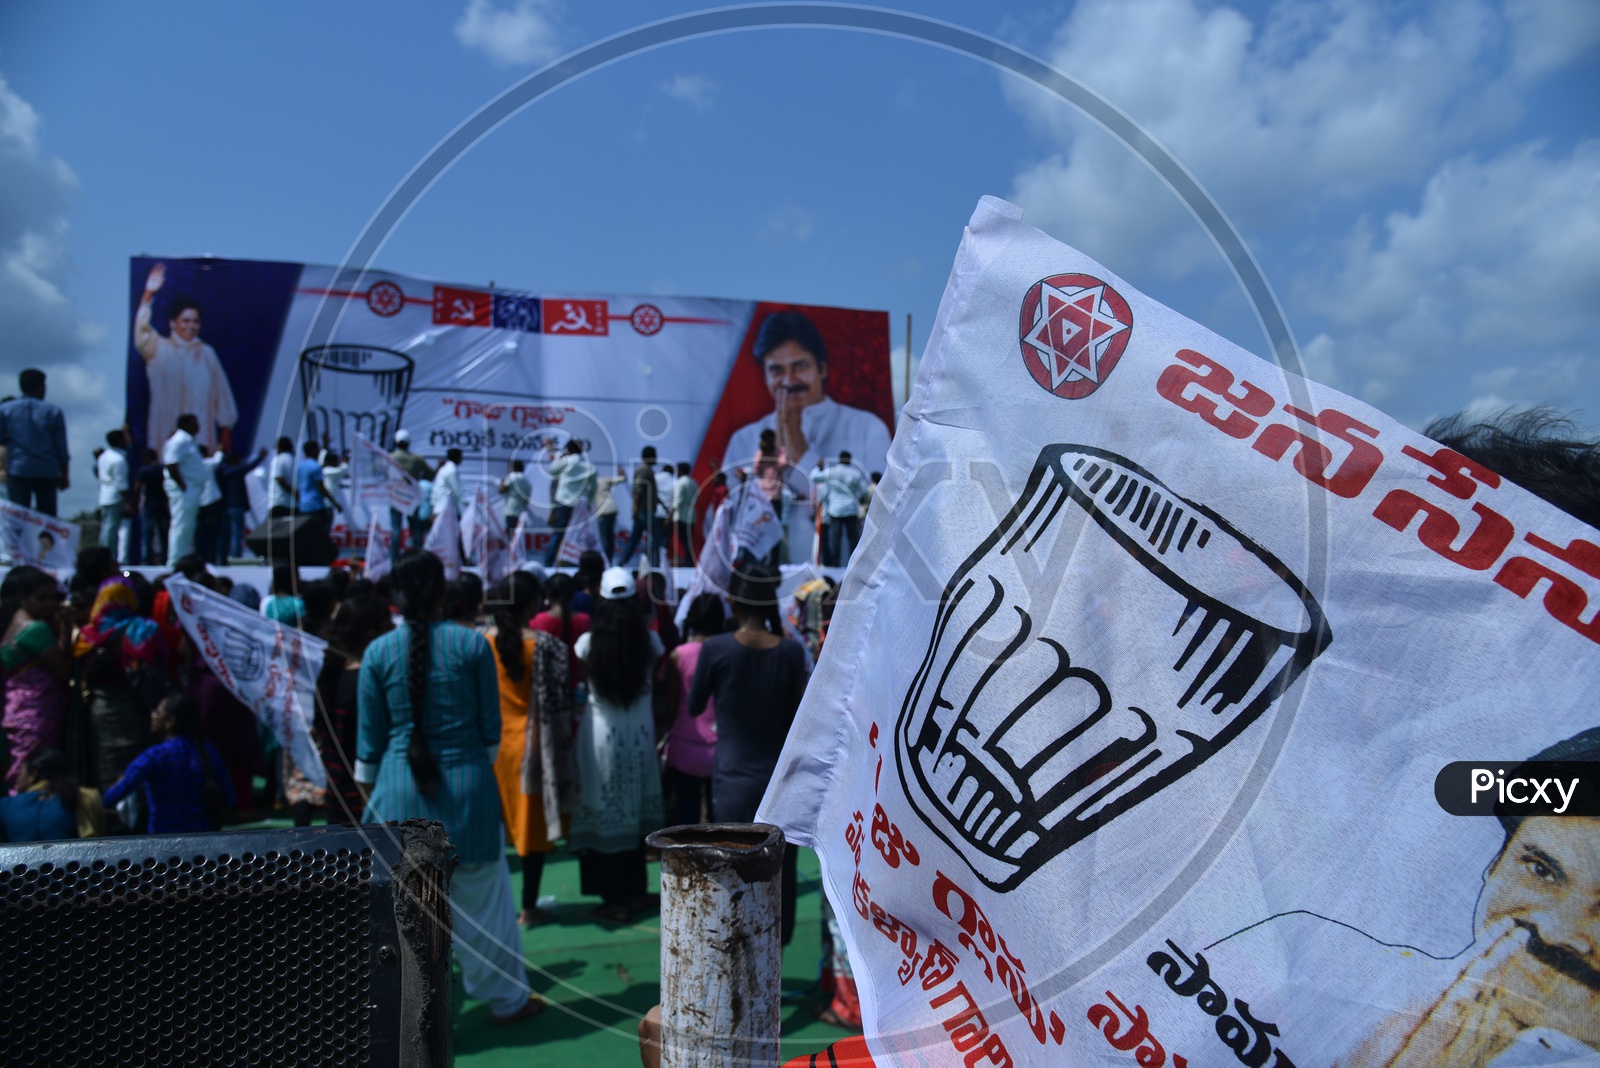 Jana Sena party symbol 'Glass tumbler' on a flag